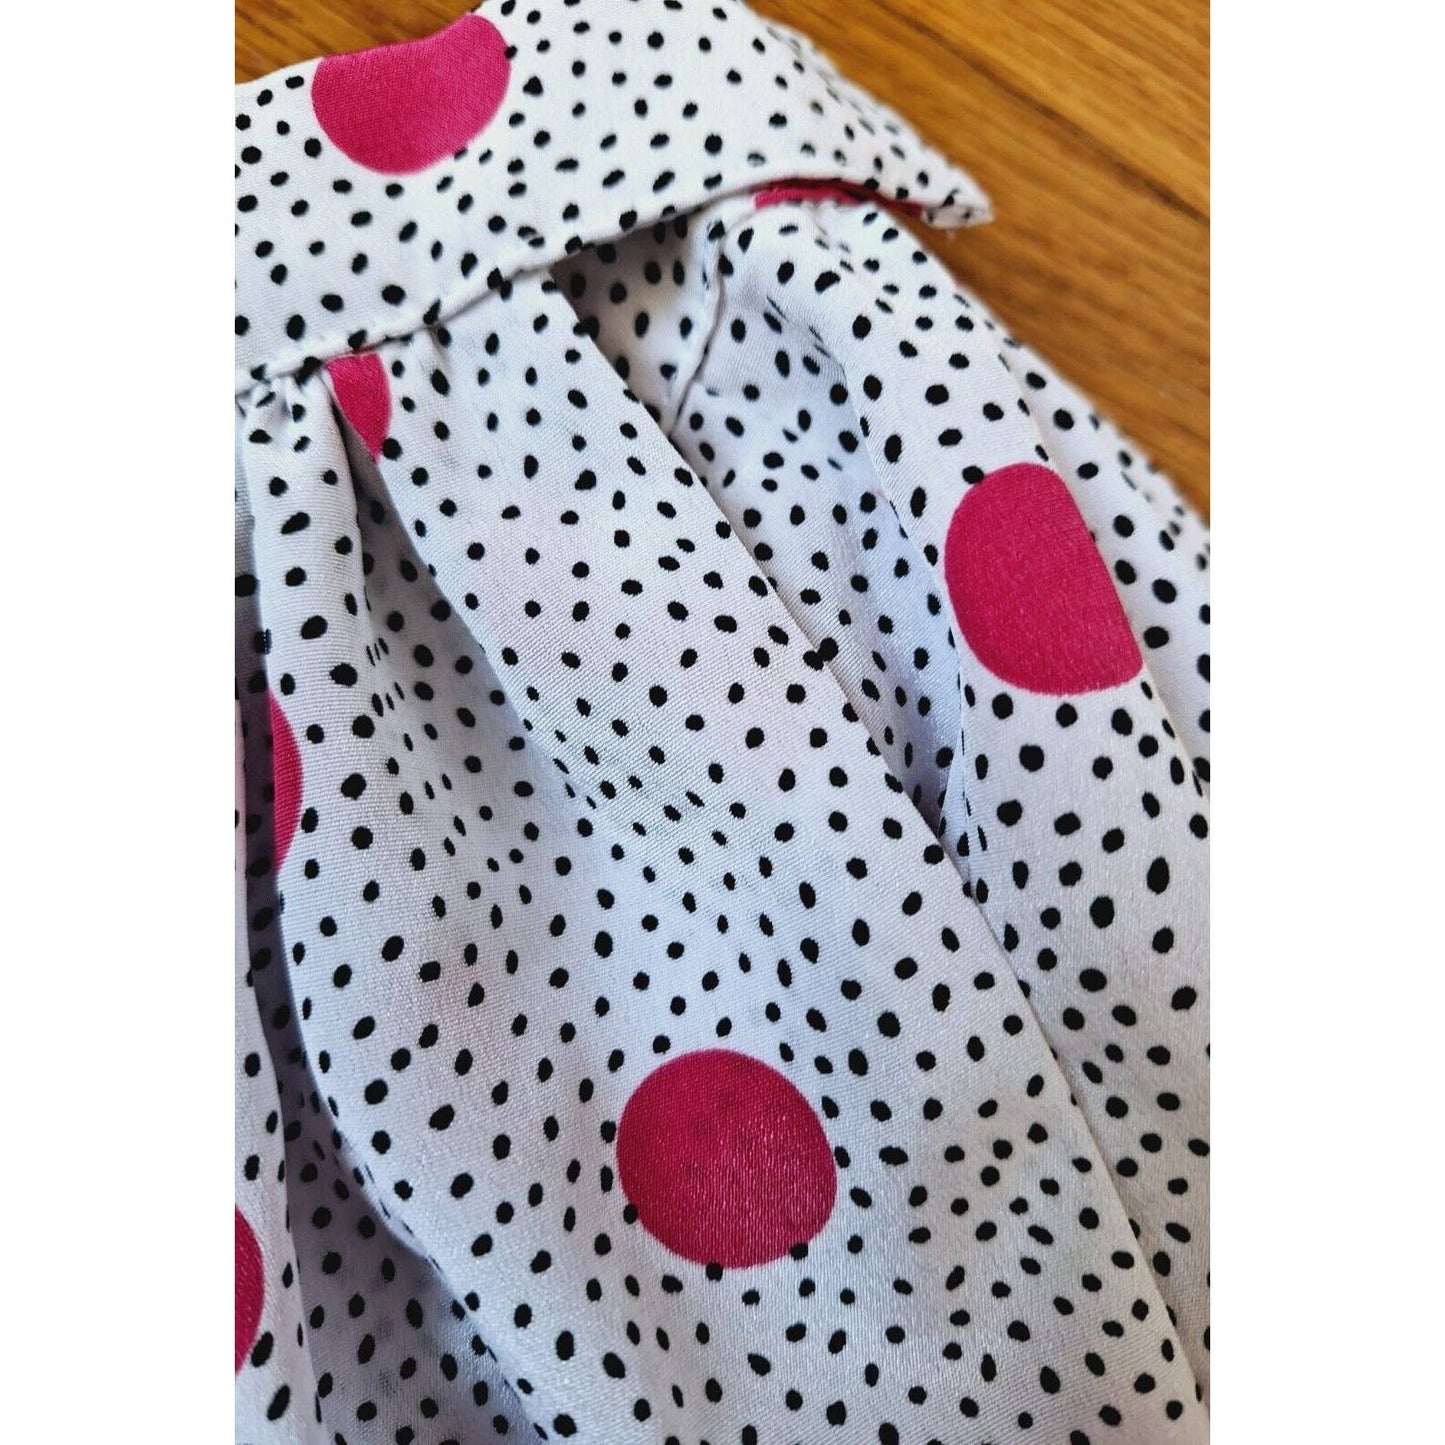 Vintage 80s Pink Polka Dot Skirt Size XS Waist 25"